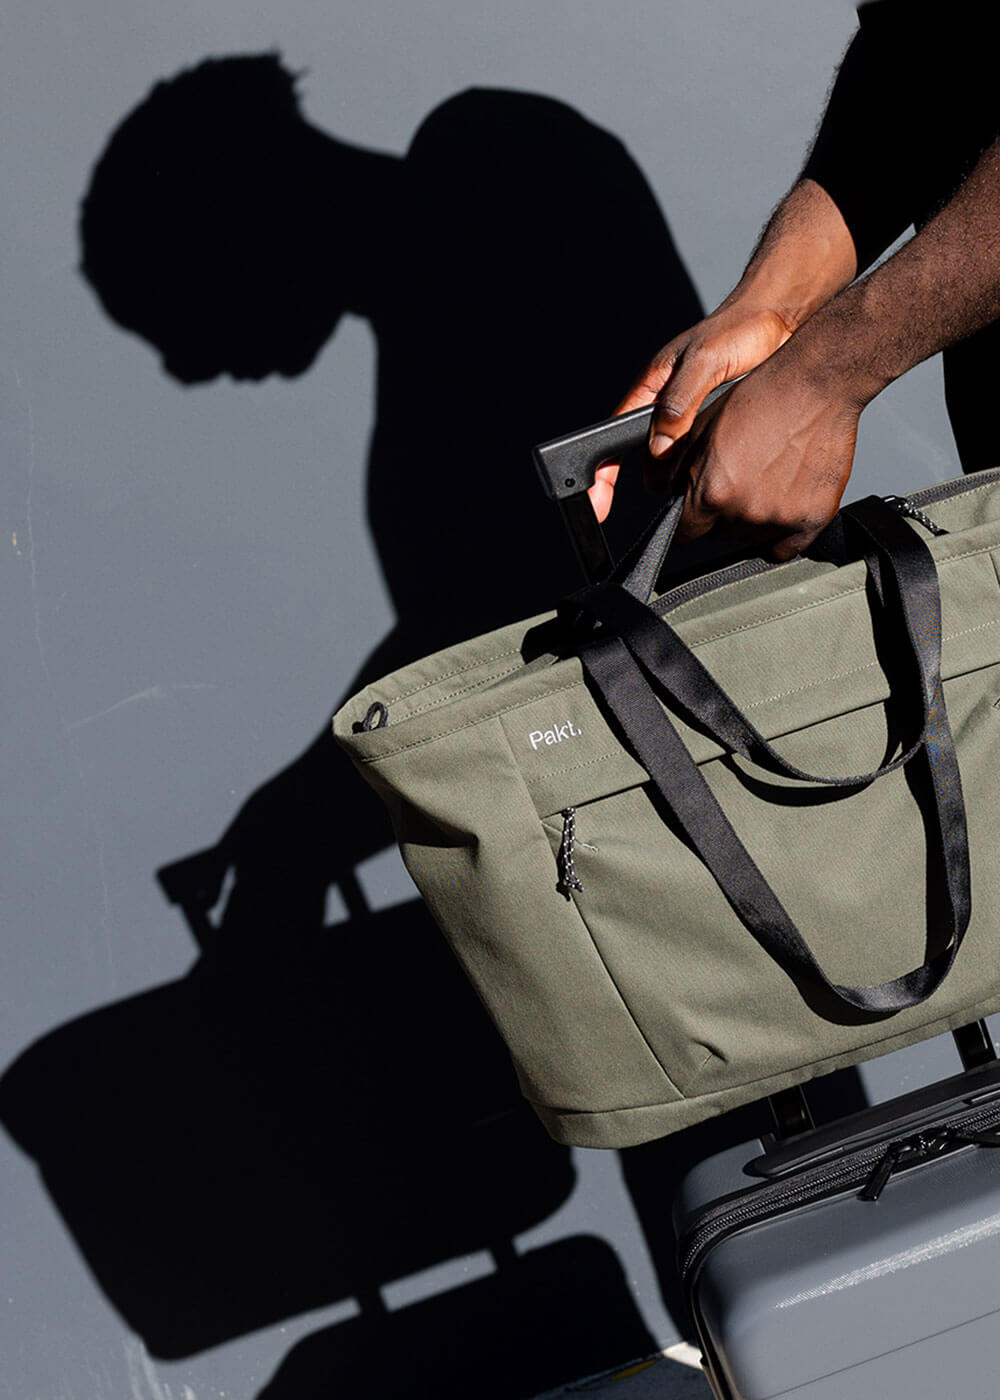 American Gear Black Medium Rolling Carry-on Suitcase 24 in. | eBay